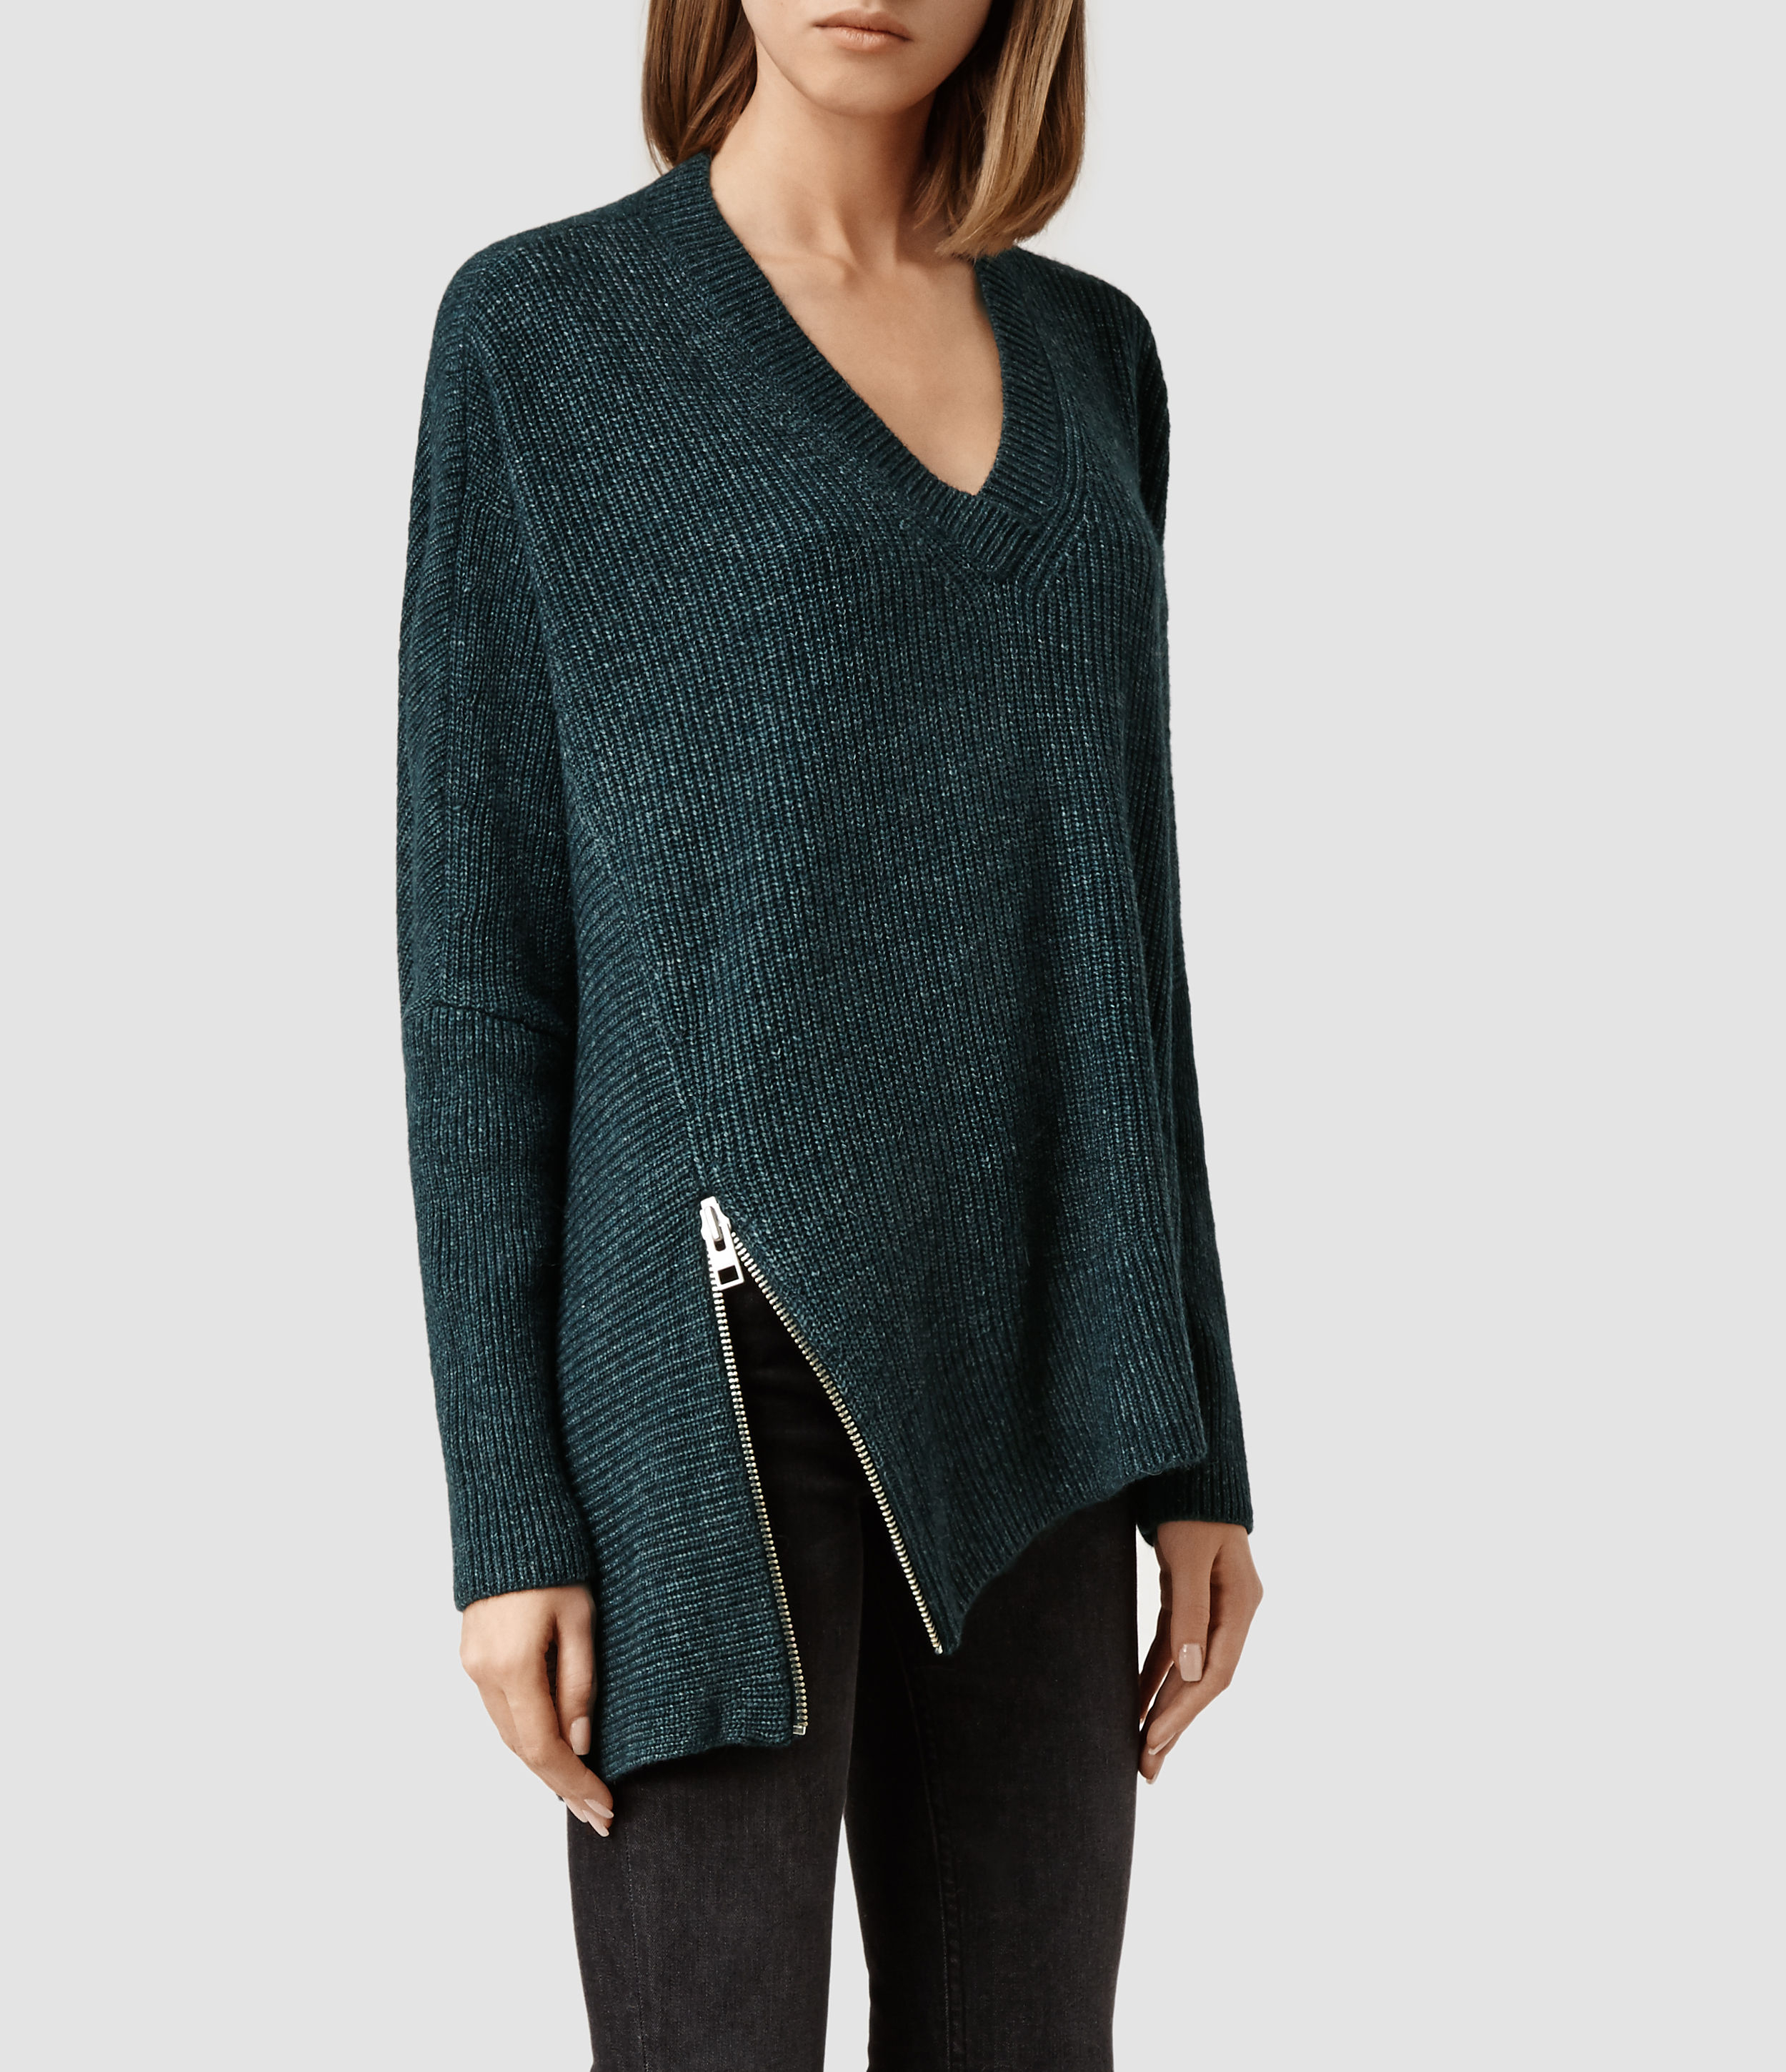 Lyst - Allsaints Able Zip Sweater in Green